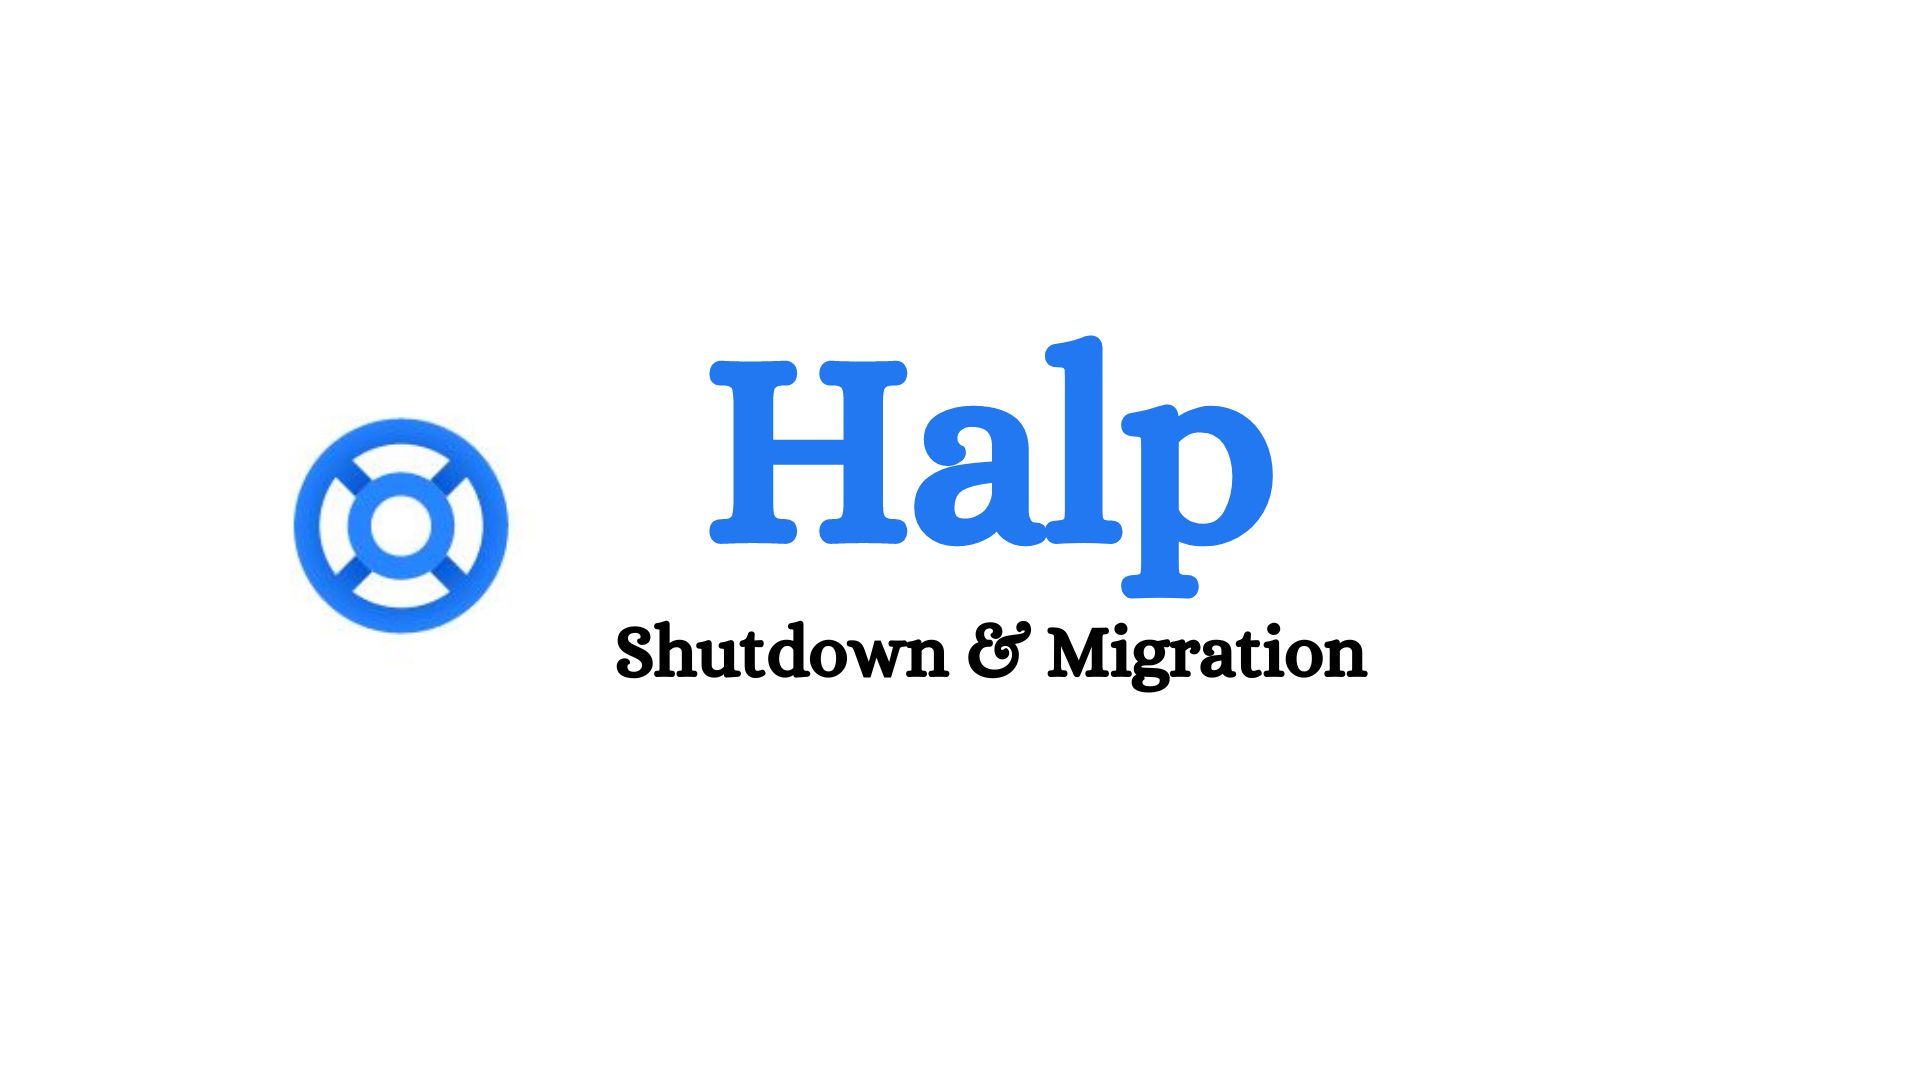 Halp shutdown and migration